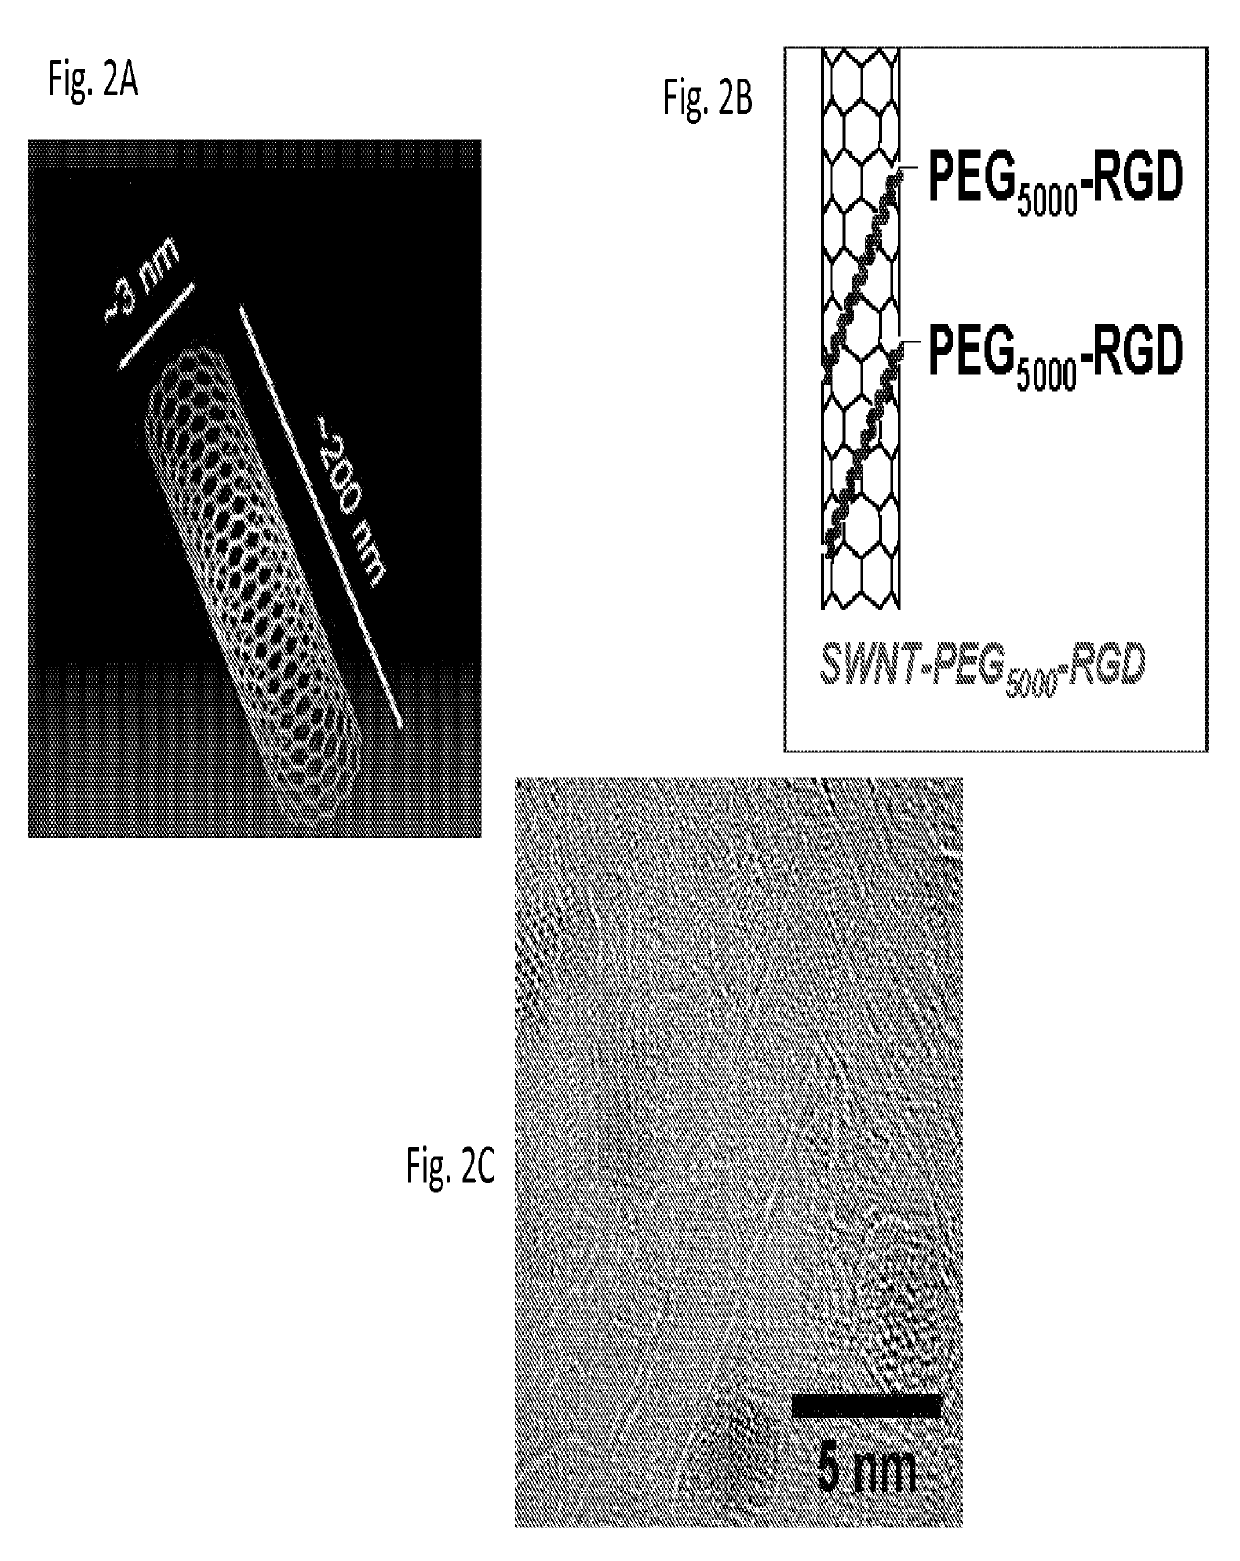 Carbon Nanotubes for Imaging and Drug Delivery